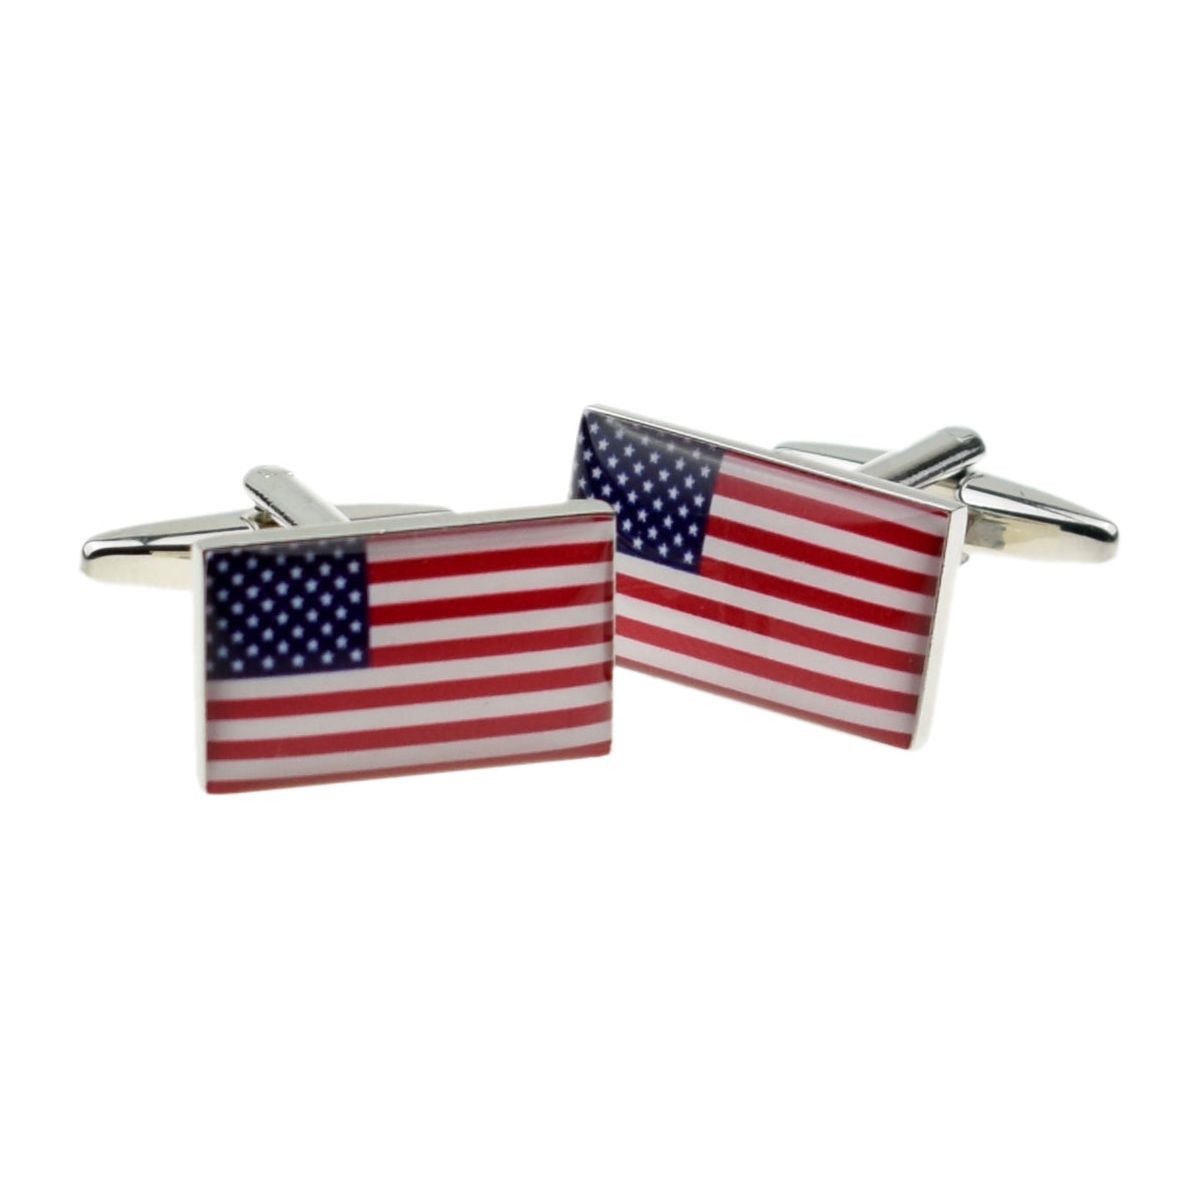 USA Flag Cufflinks - Ashton and Finch